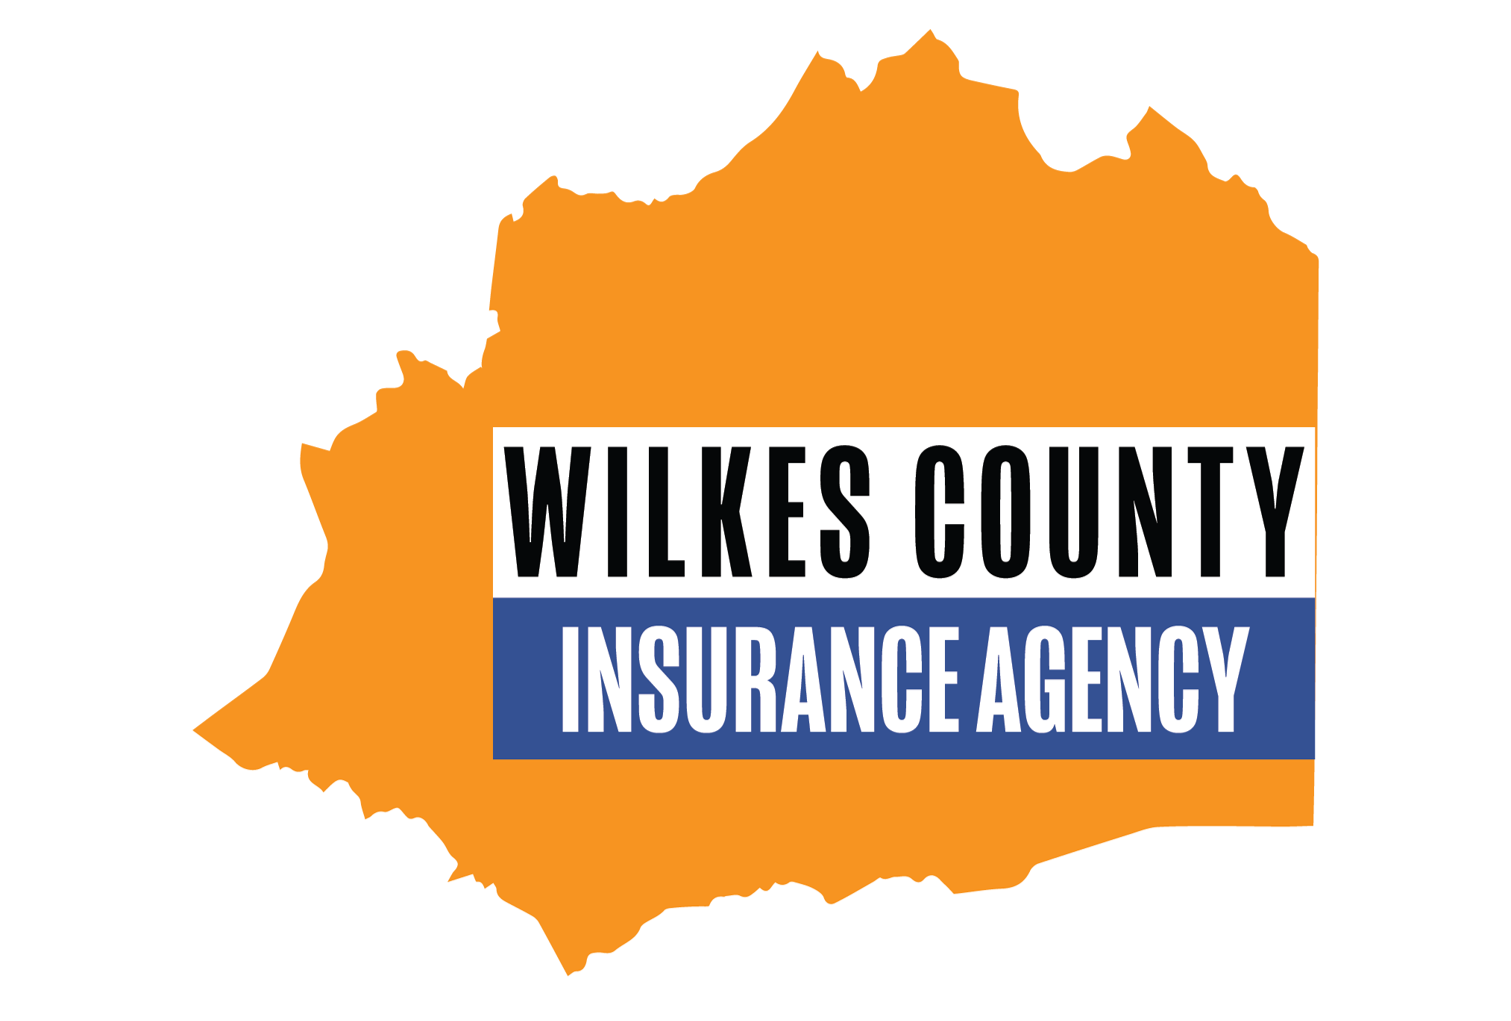 Wilkes Insurance